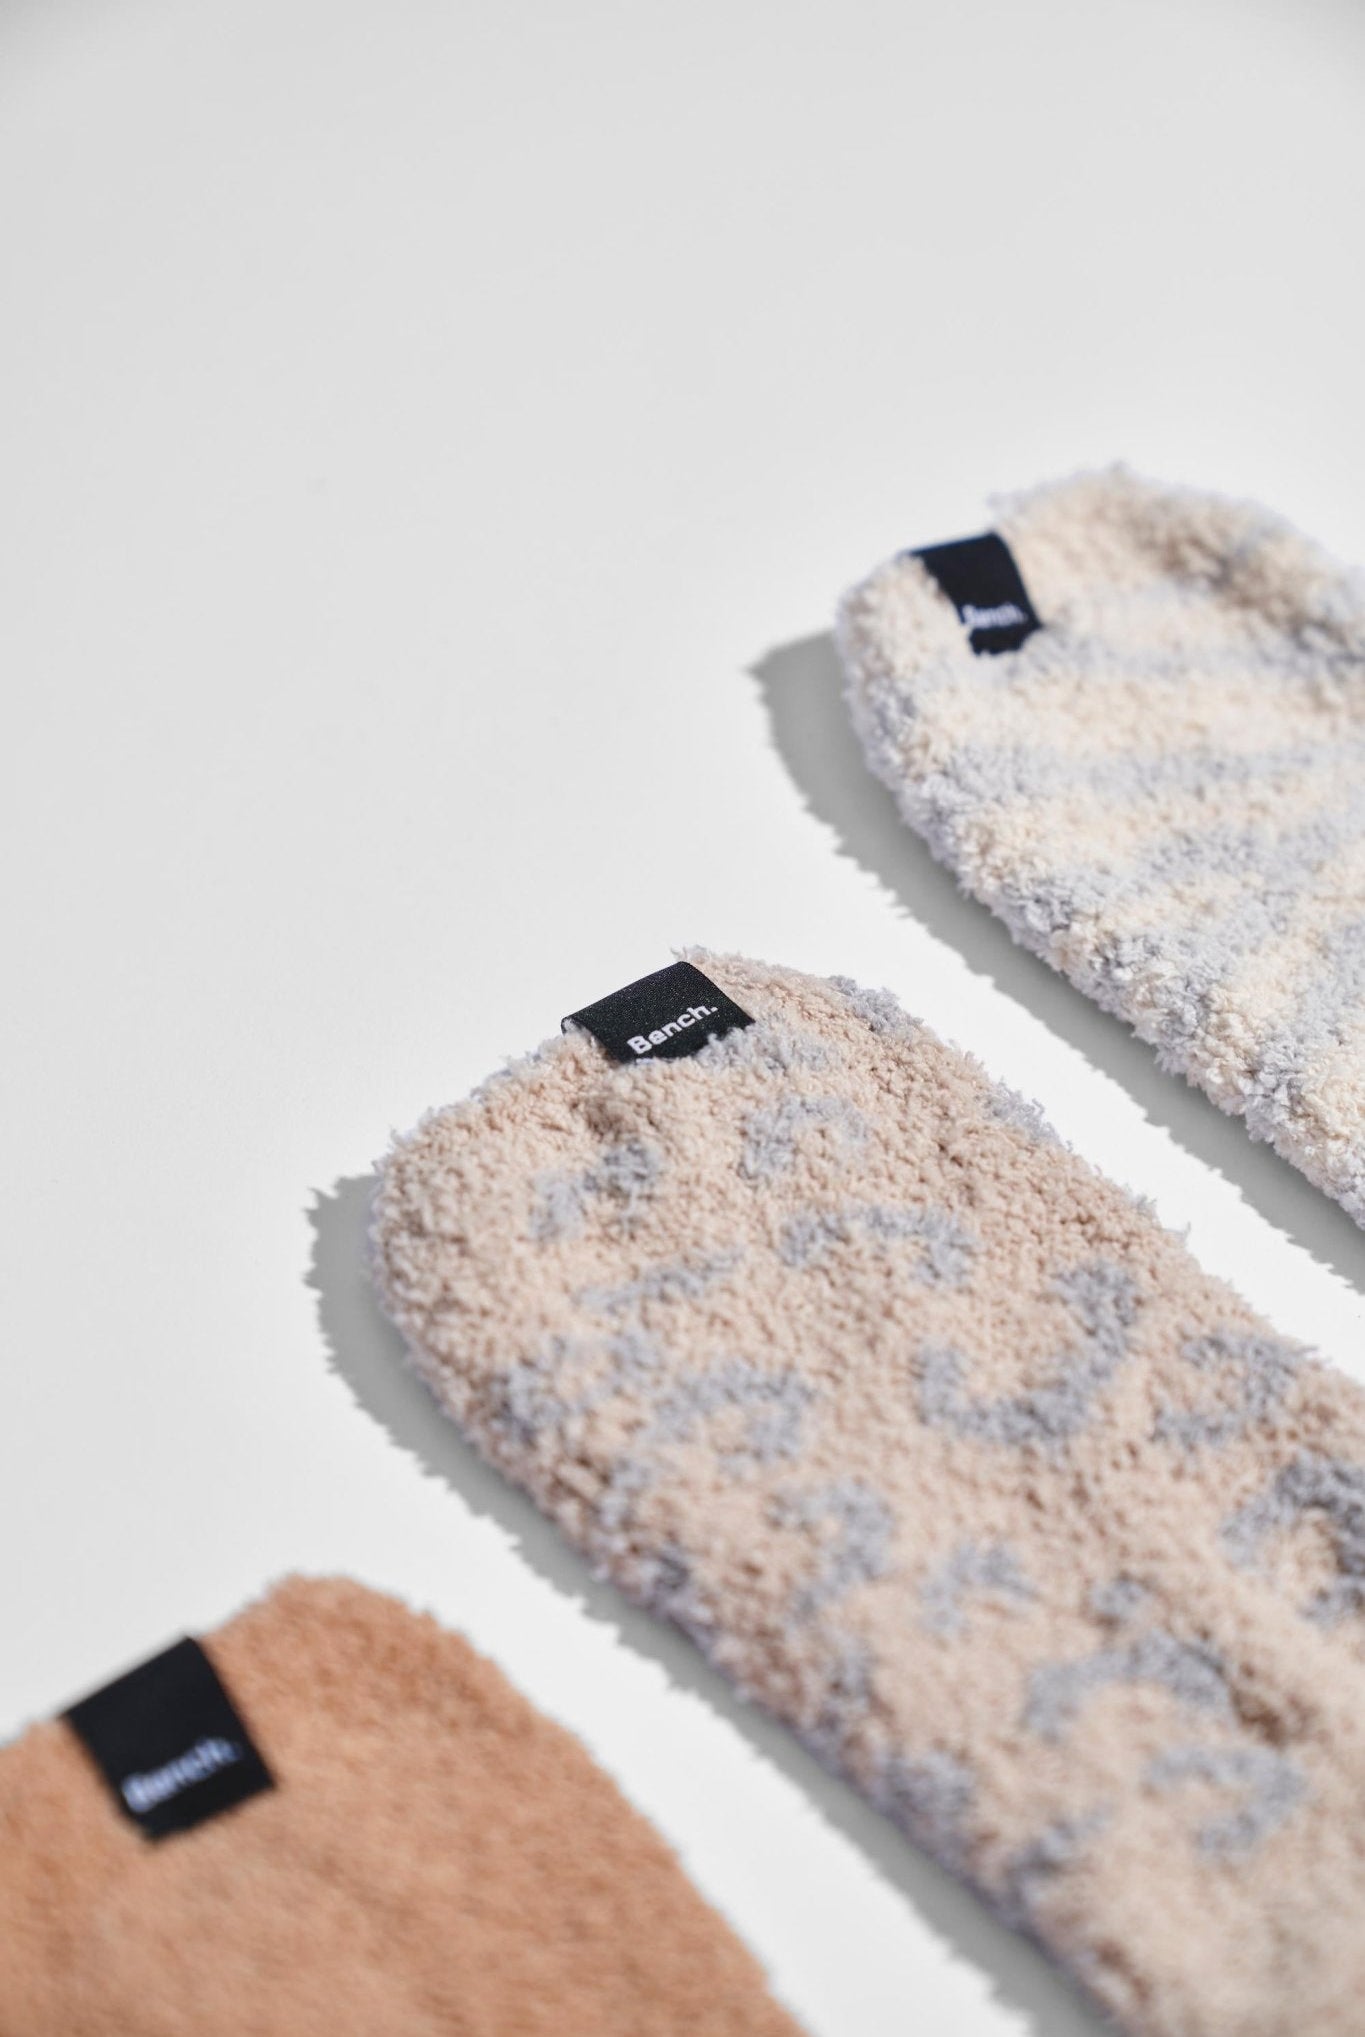 Womens 'AXELLE' 3 Pack Slipper Socks - ASSORTED - Shop at www.Bench.co.uk #LoveMyHood